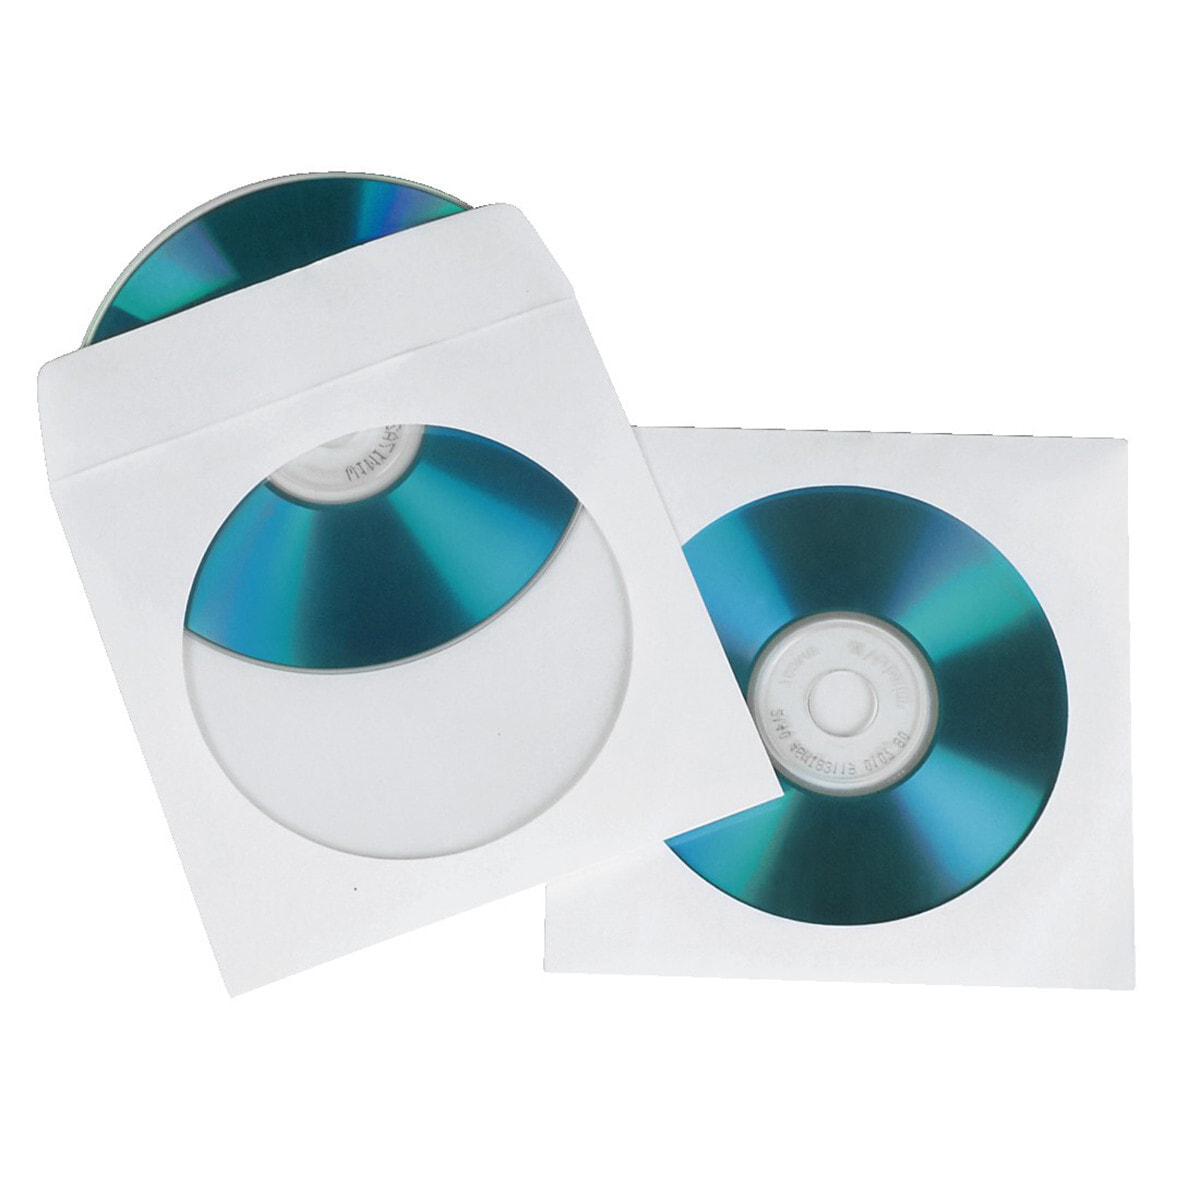 Hama CD Paper Sleeves, white, 100 pcs/Pack 1 диск (ов) Белый 00051174